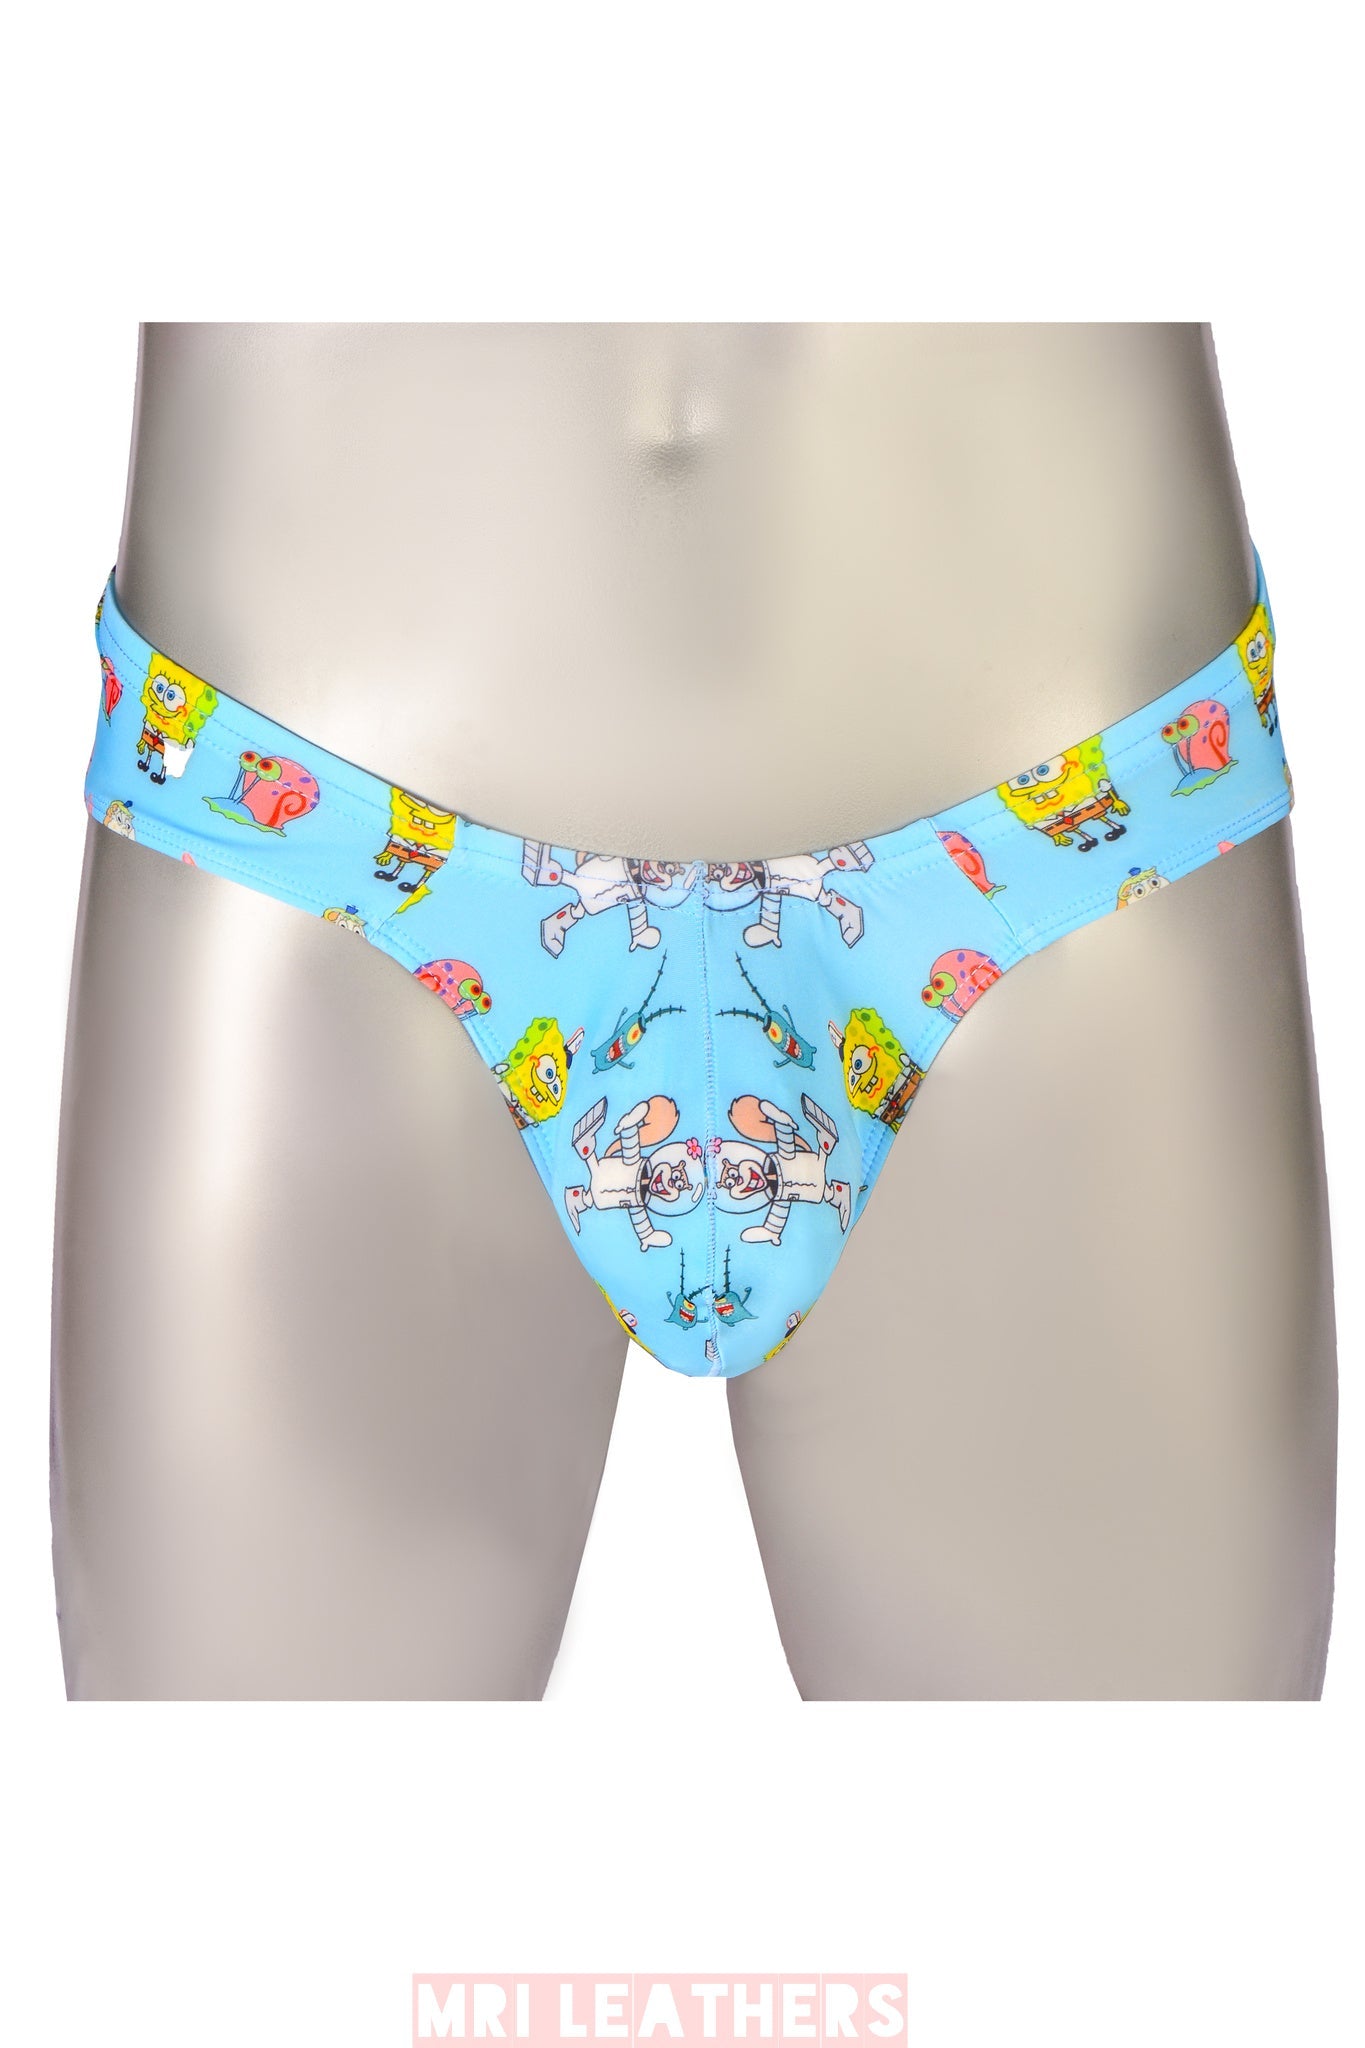 Cartoon Printed Briefs Men Underwear Jockstrap Bugle Pouch Panties Calzoncillos Hombre Underpants Cueca Low Waist Thongs - MRI Leathers